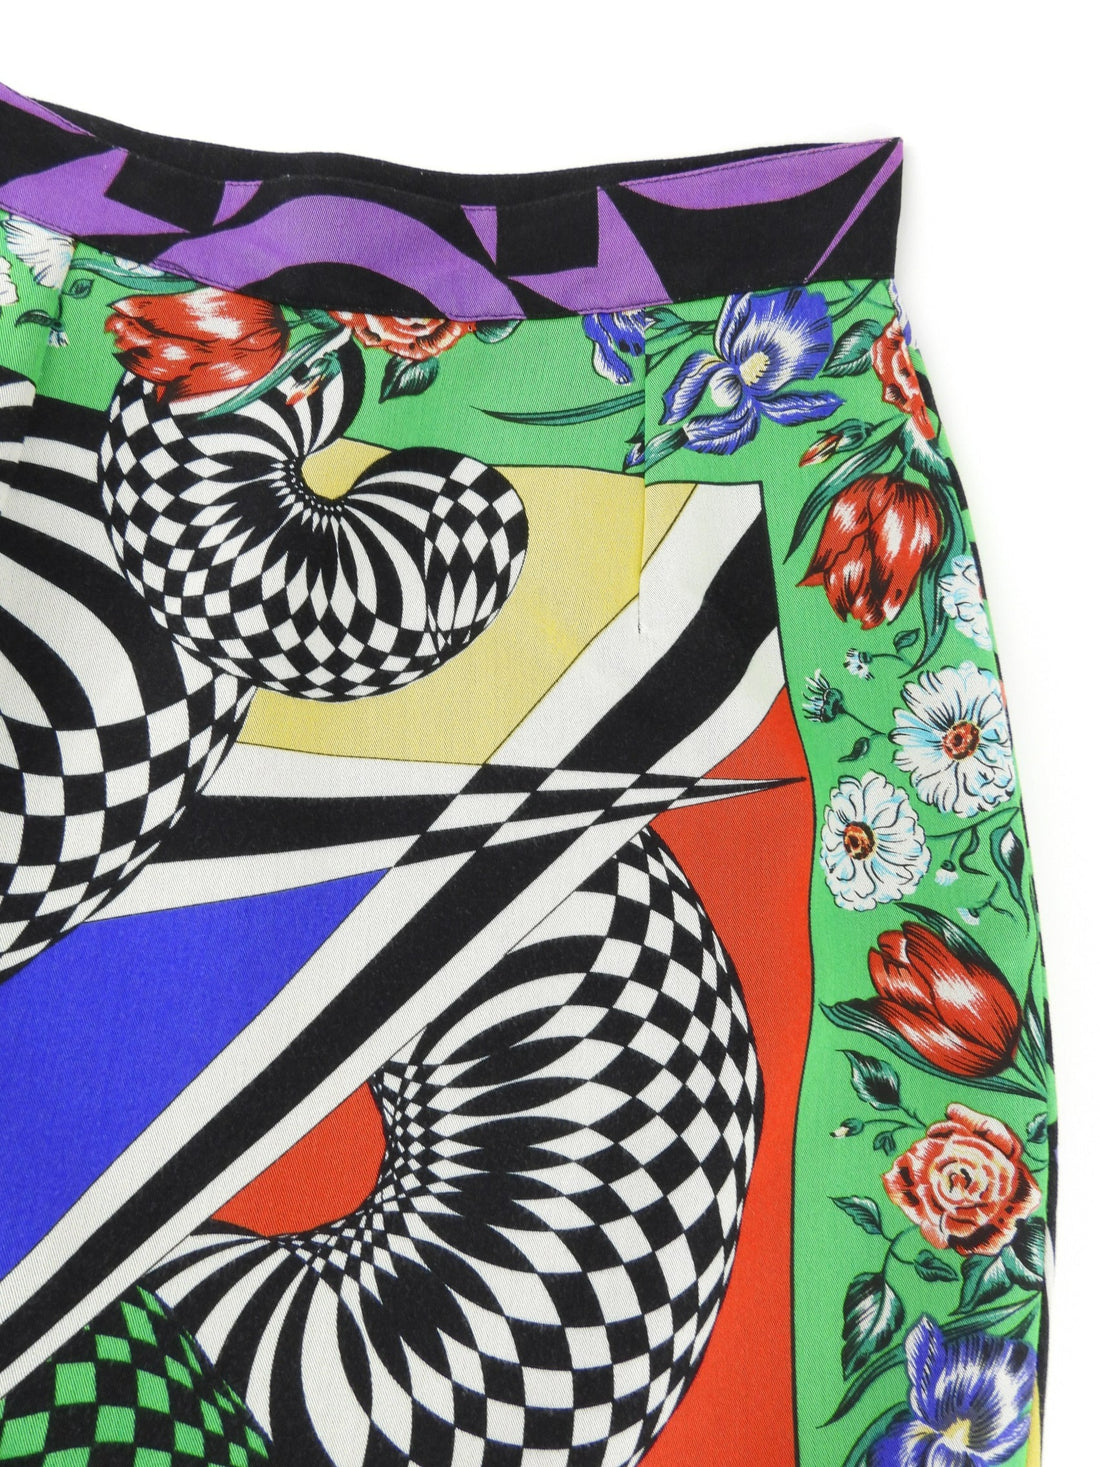 Versus Gianni Versace Multicolor Printed Pencil Skirt - 26 / 40